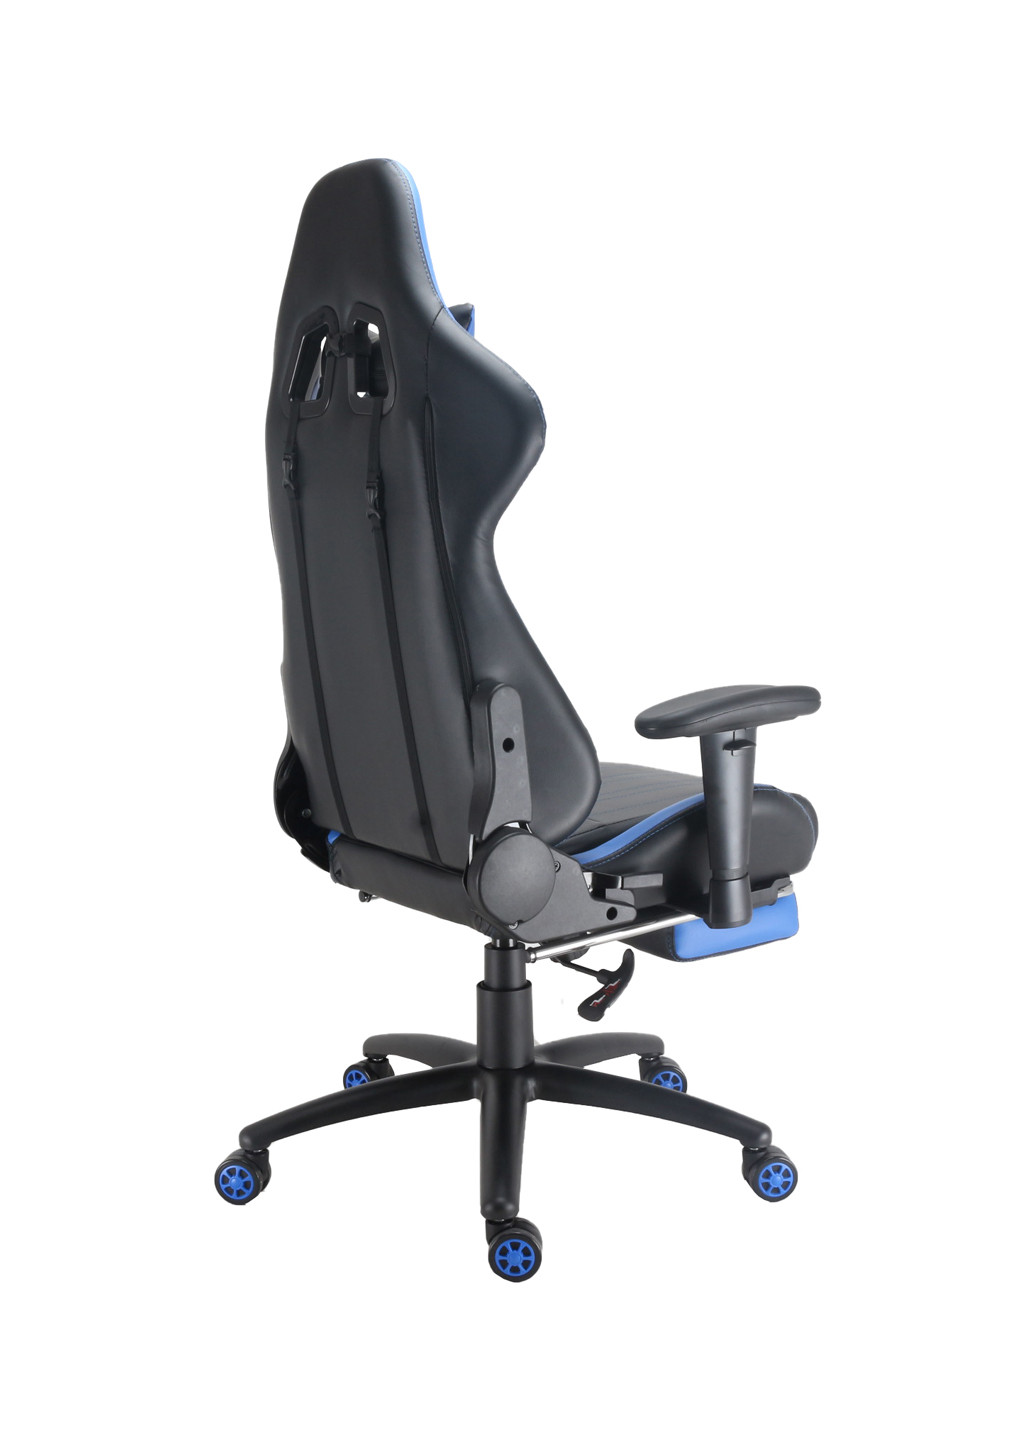 Кресло X-2534-F Black/Blue GT Racer кресло gt racer x-2534-f black/blue (143068479)